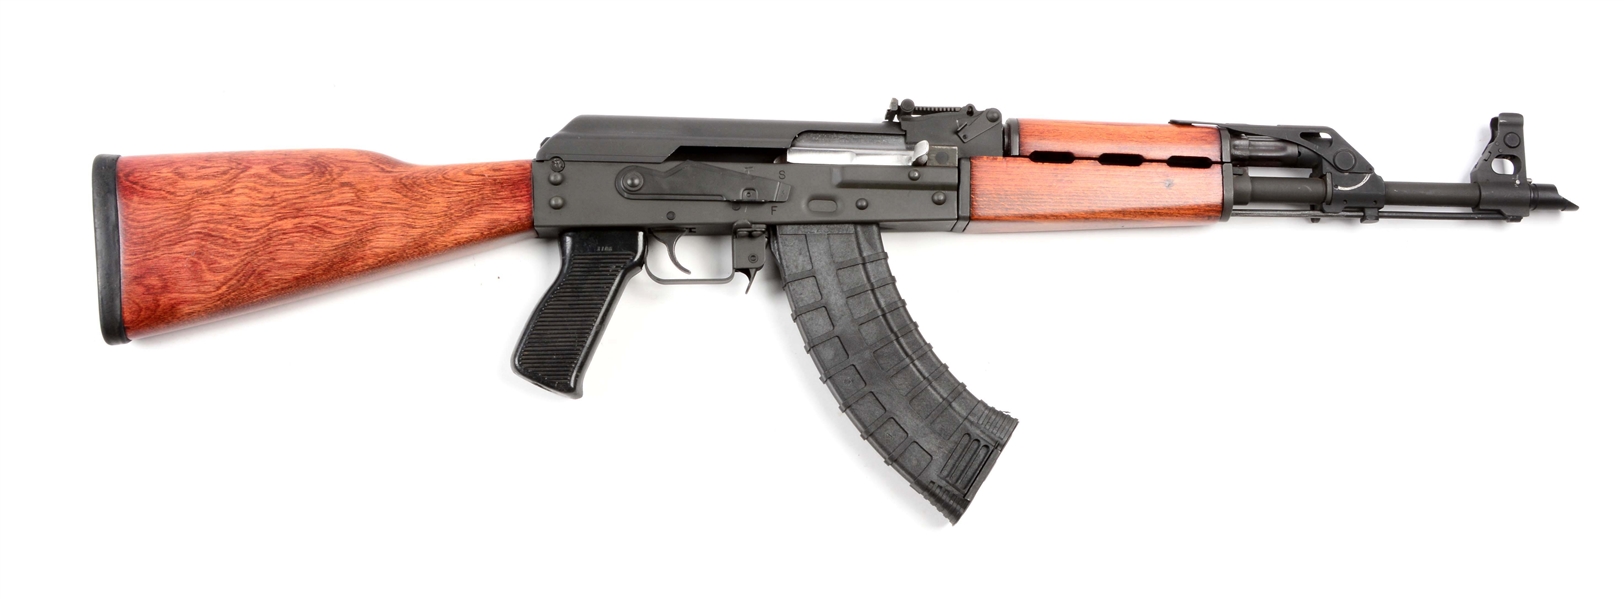 (M) YUGOSLAVIAN AK-47 SEMI-AUTOMATIC RIFLE.